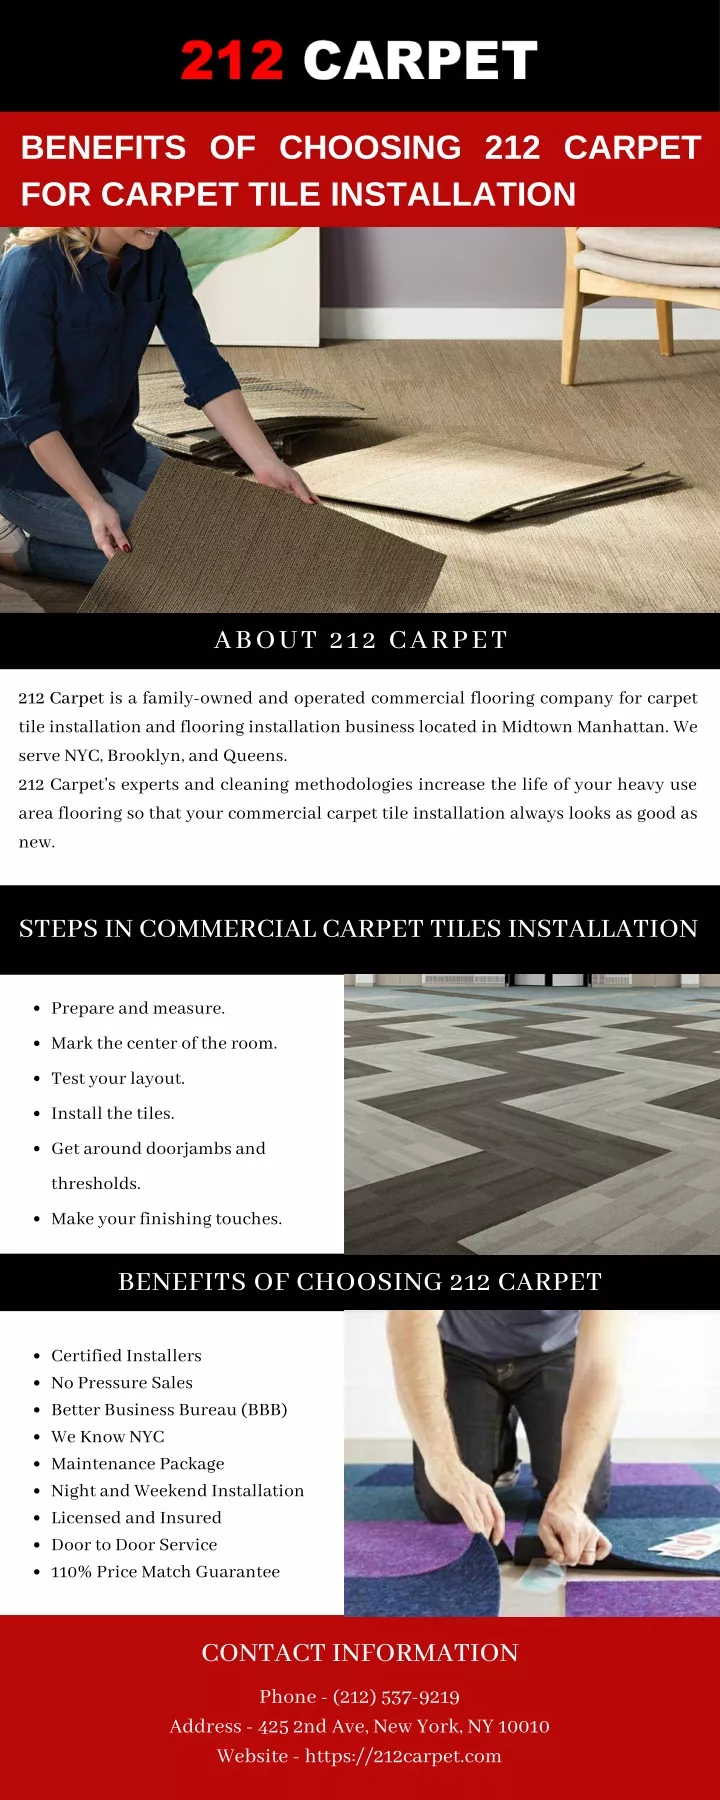 benefits of choosing 212 carpet for carpet tile